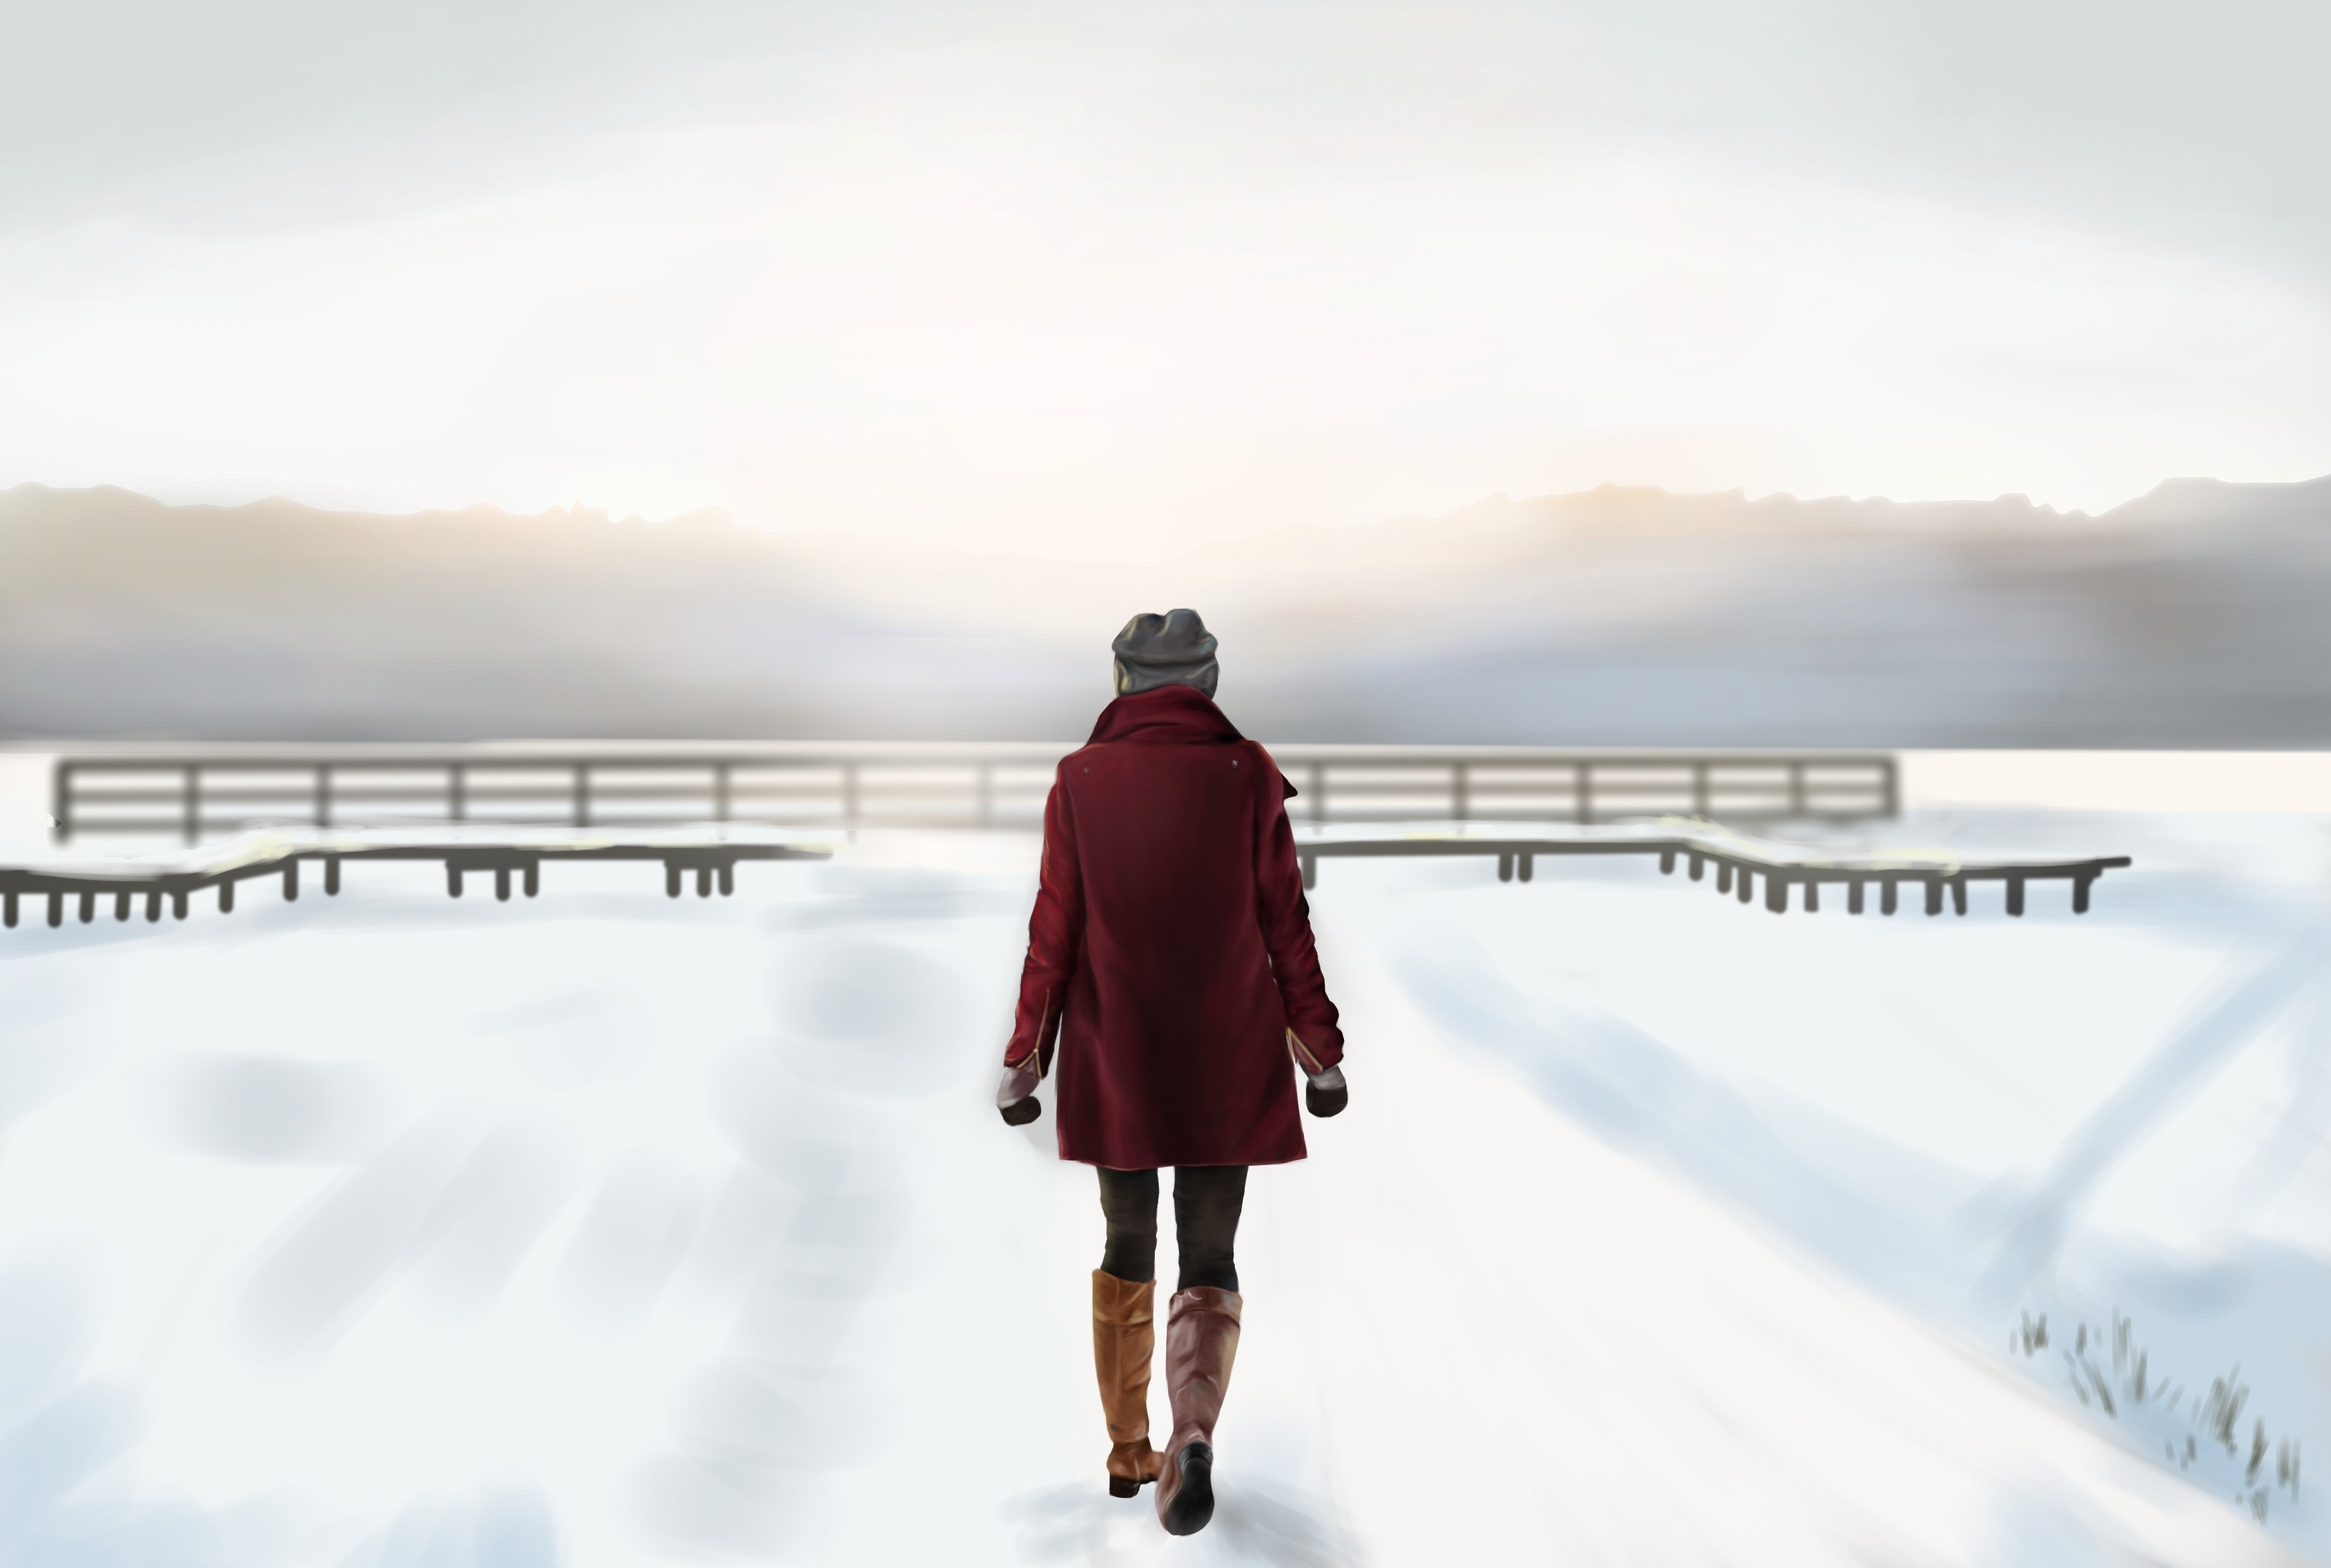 Femme dans la neige - Exo 2.5 par Morrigan